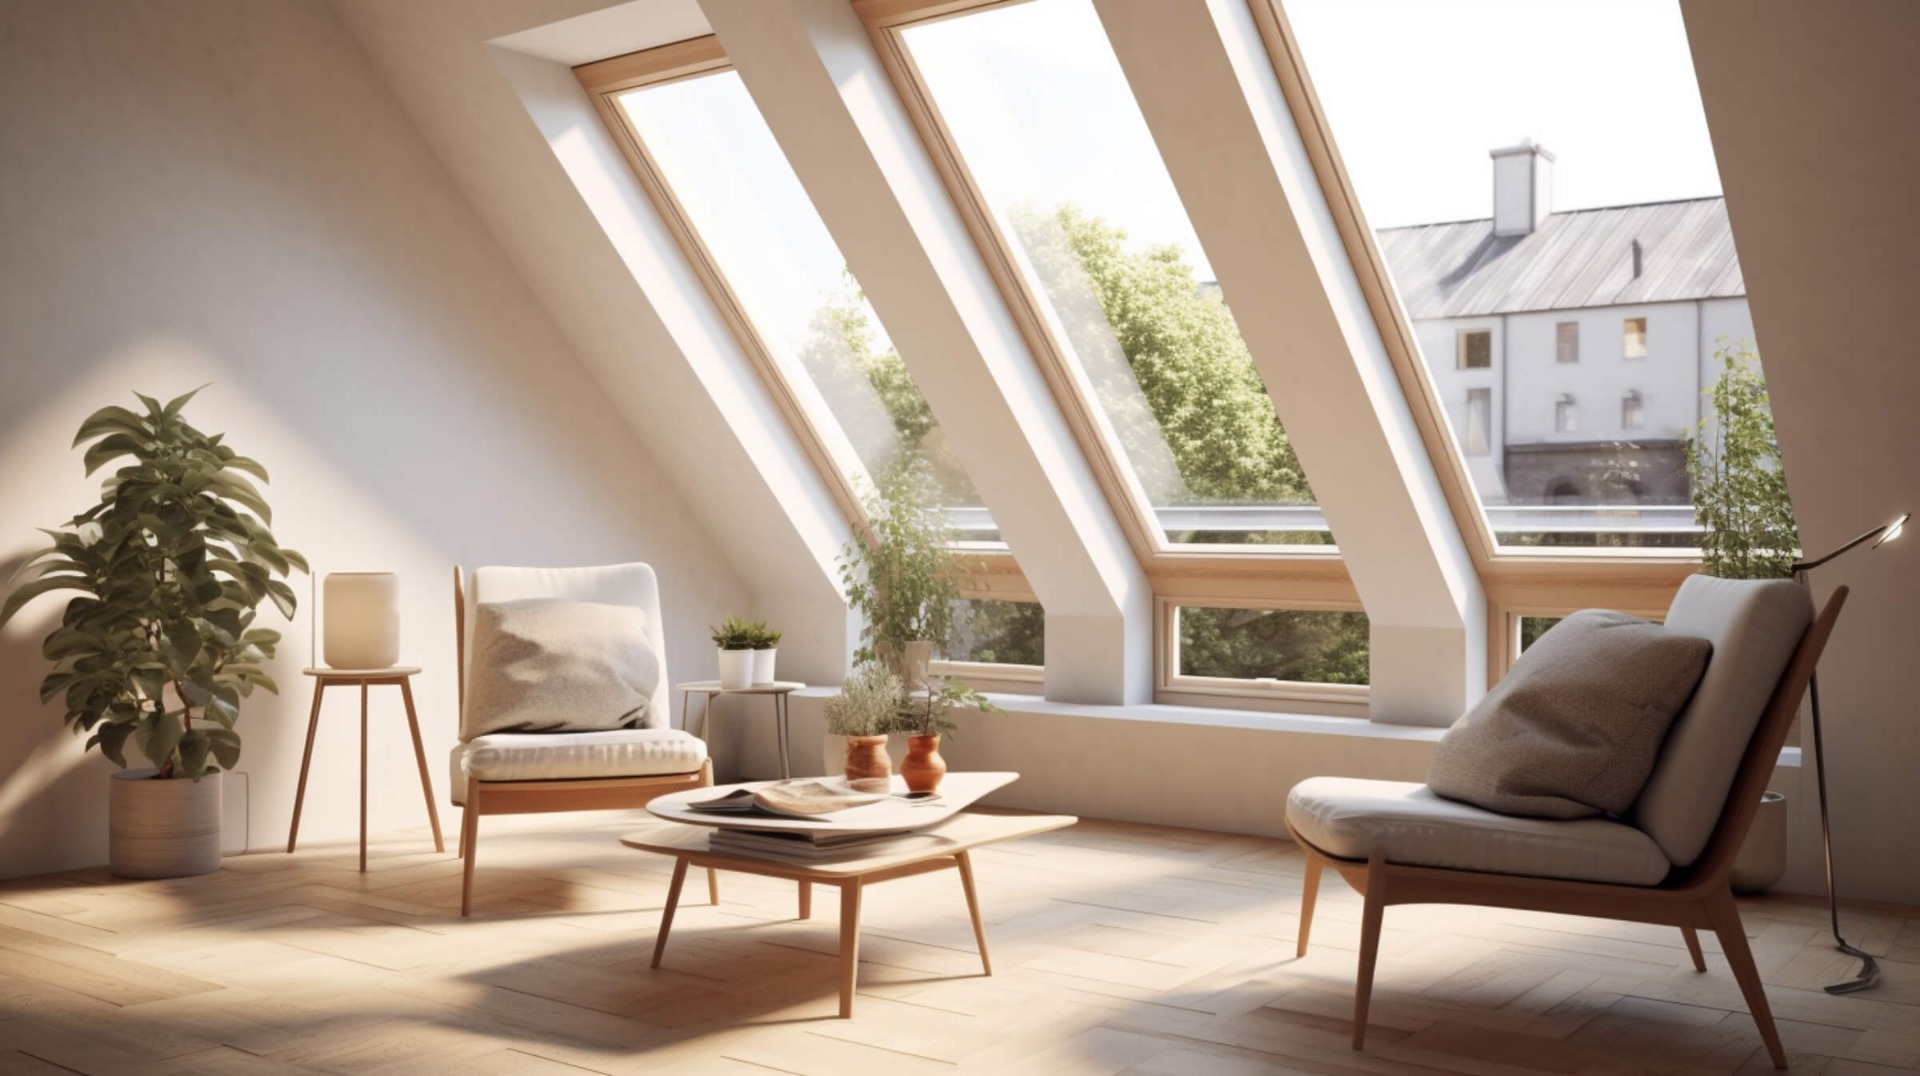 Hestya-Scandinavian-living-space-with-minimalist-style